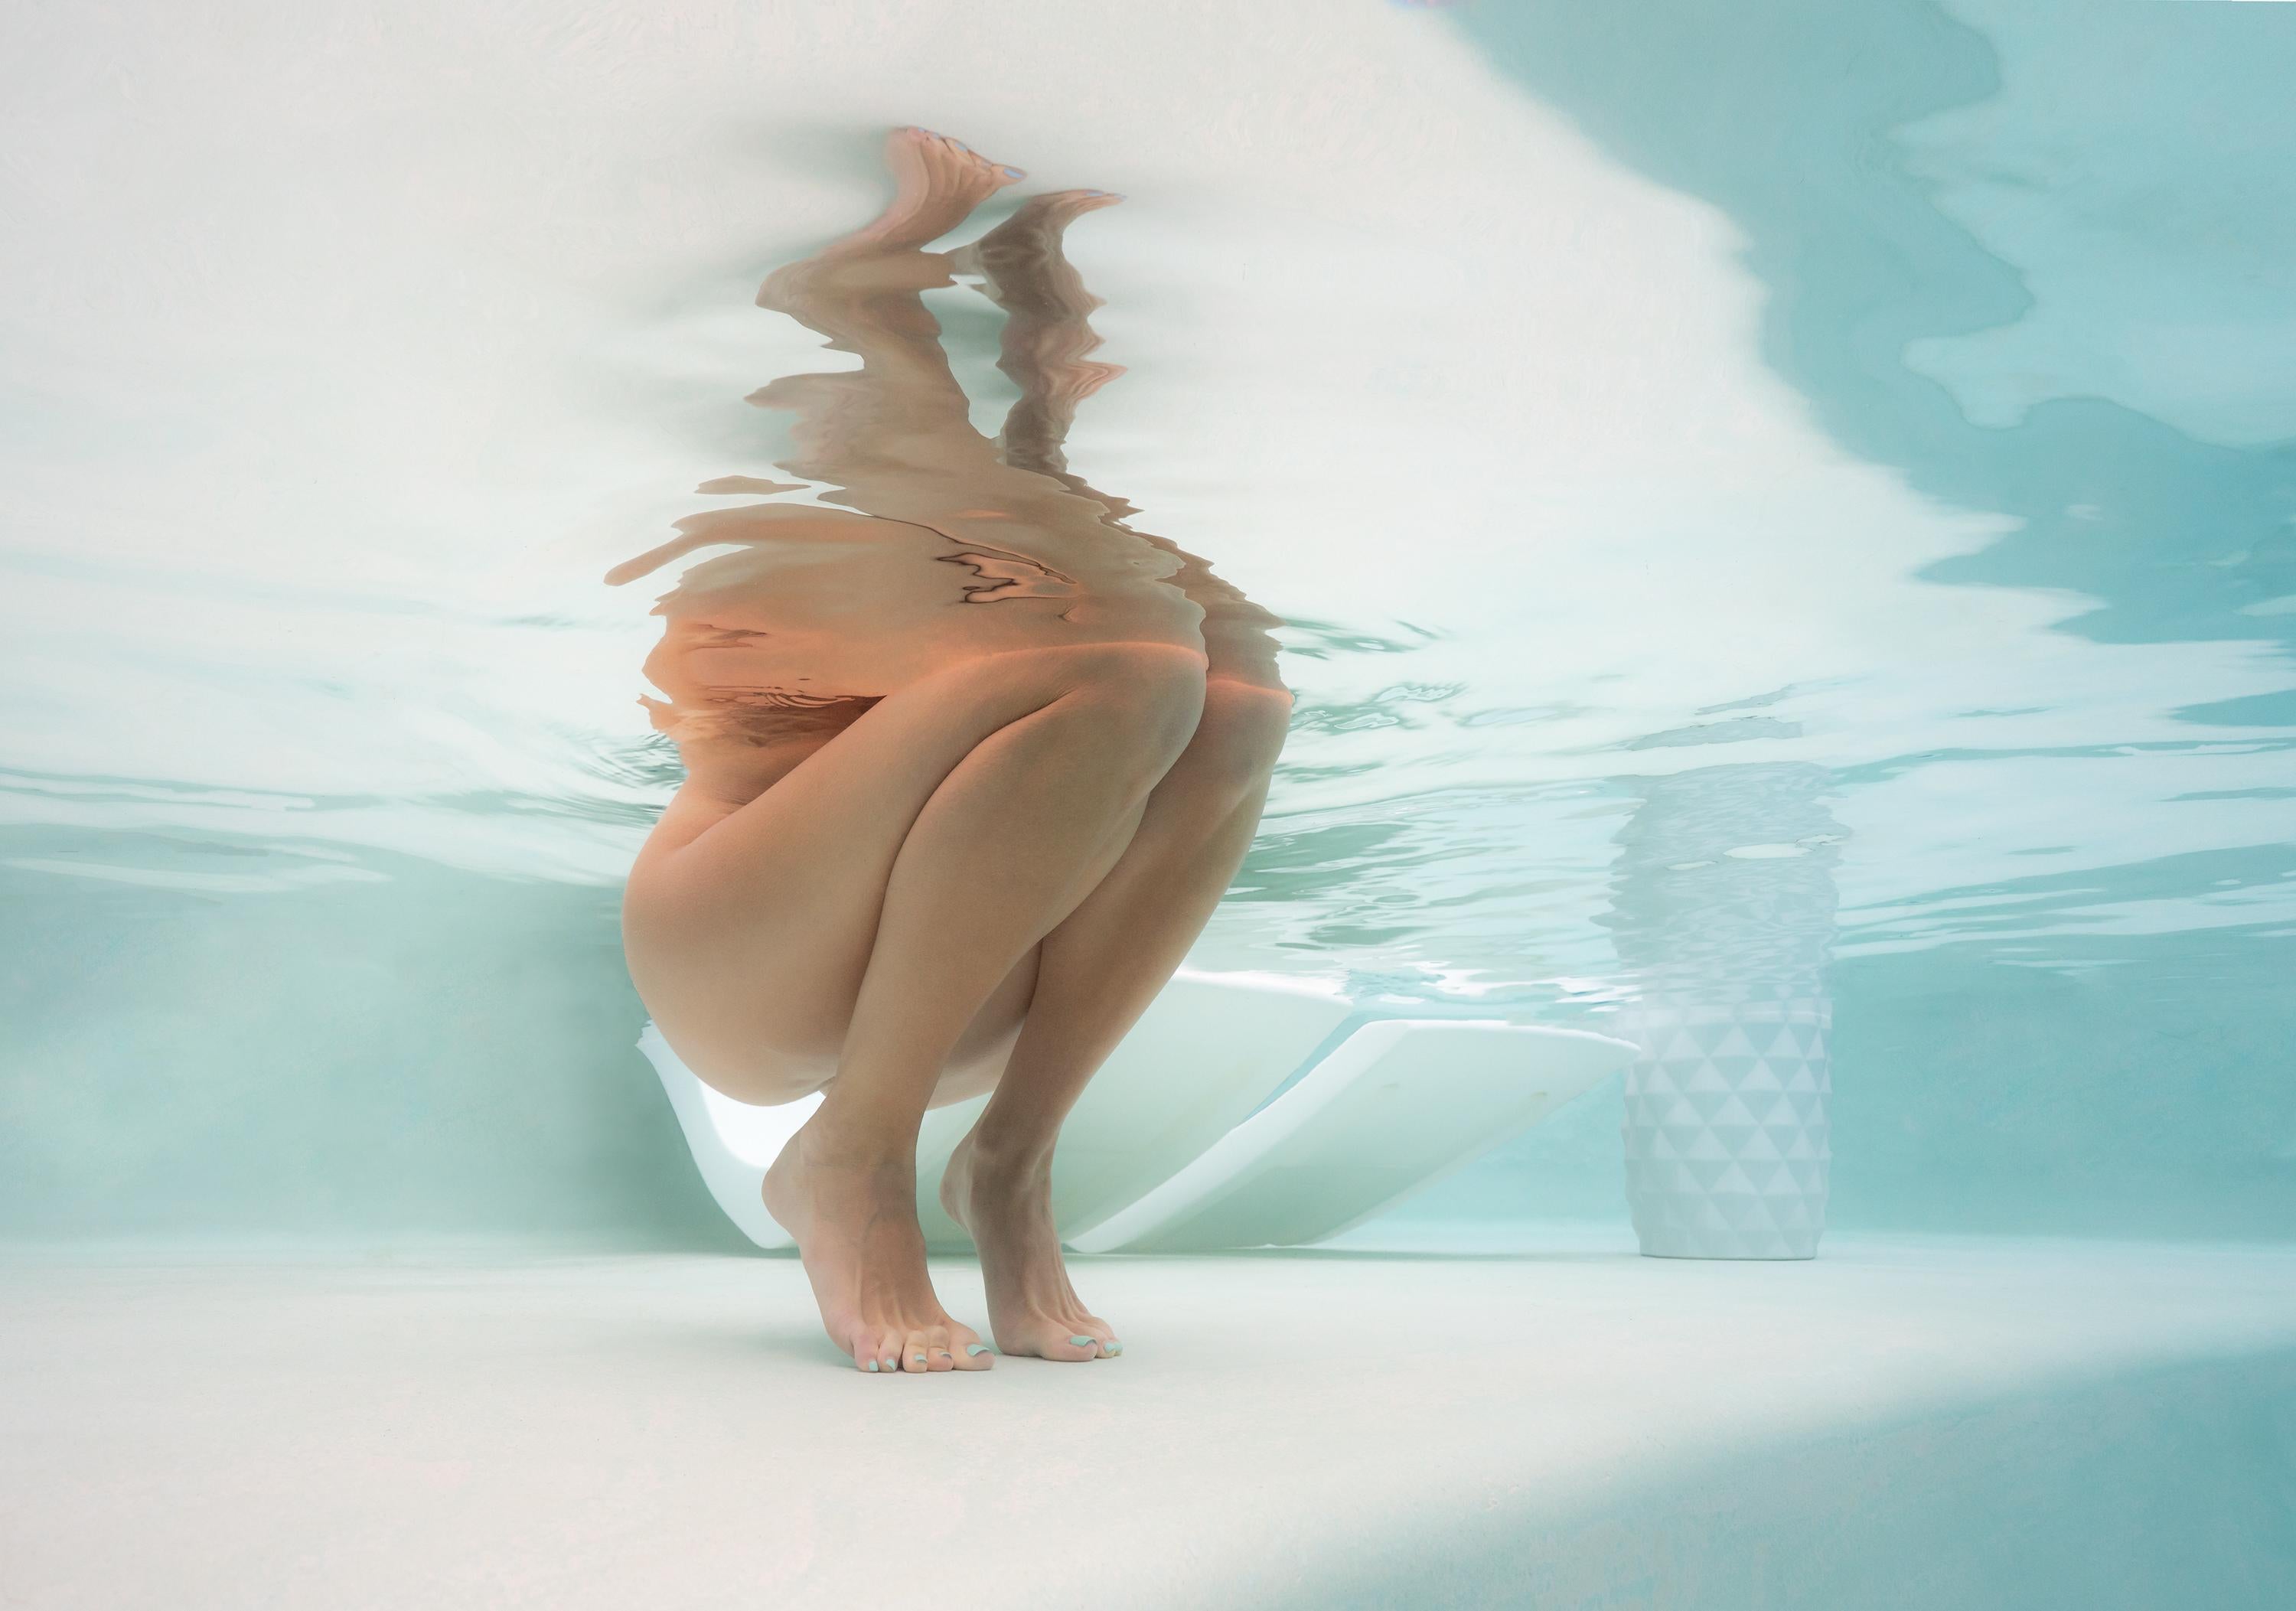 Alex Sher Figurative Photograph – Pristine - Aktfotografie unter Wasser - Archivpigmentdruck 35х50"